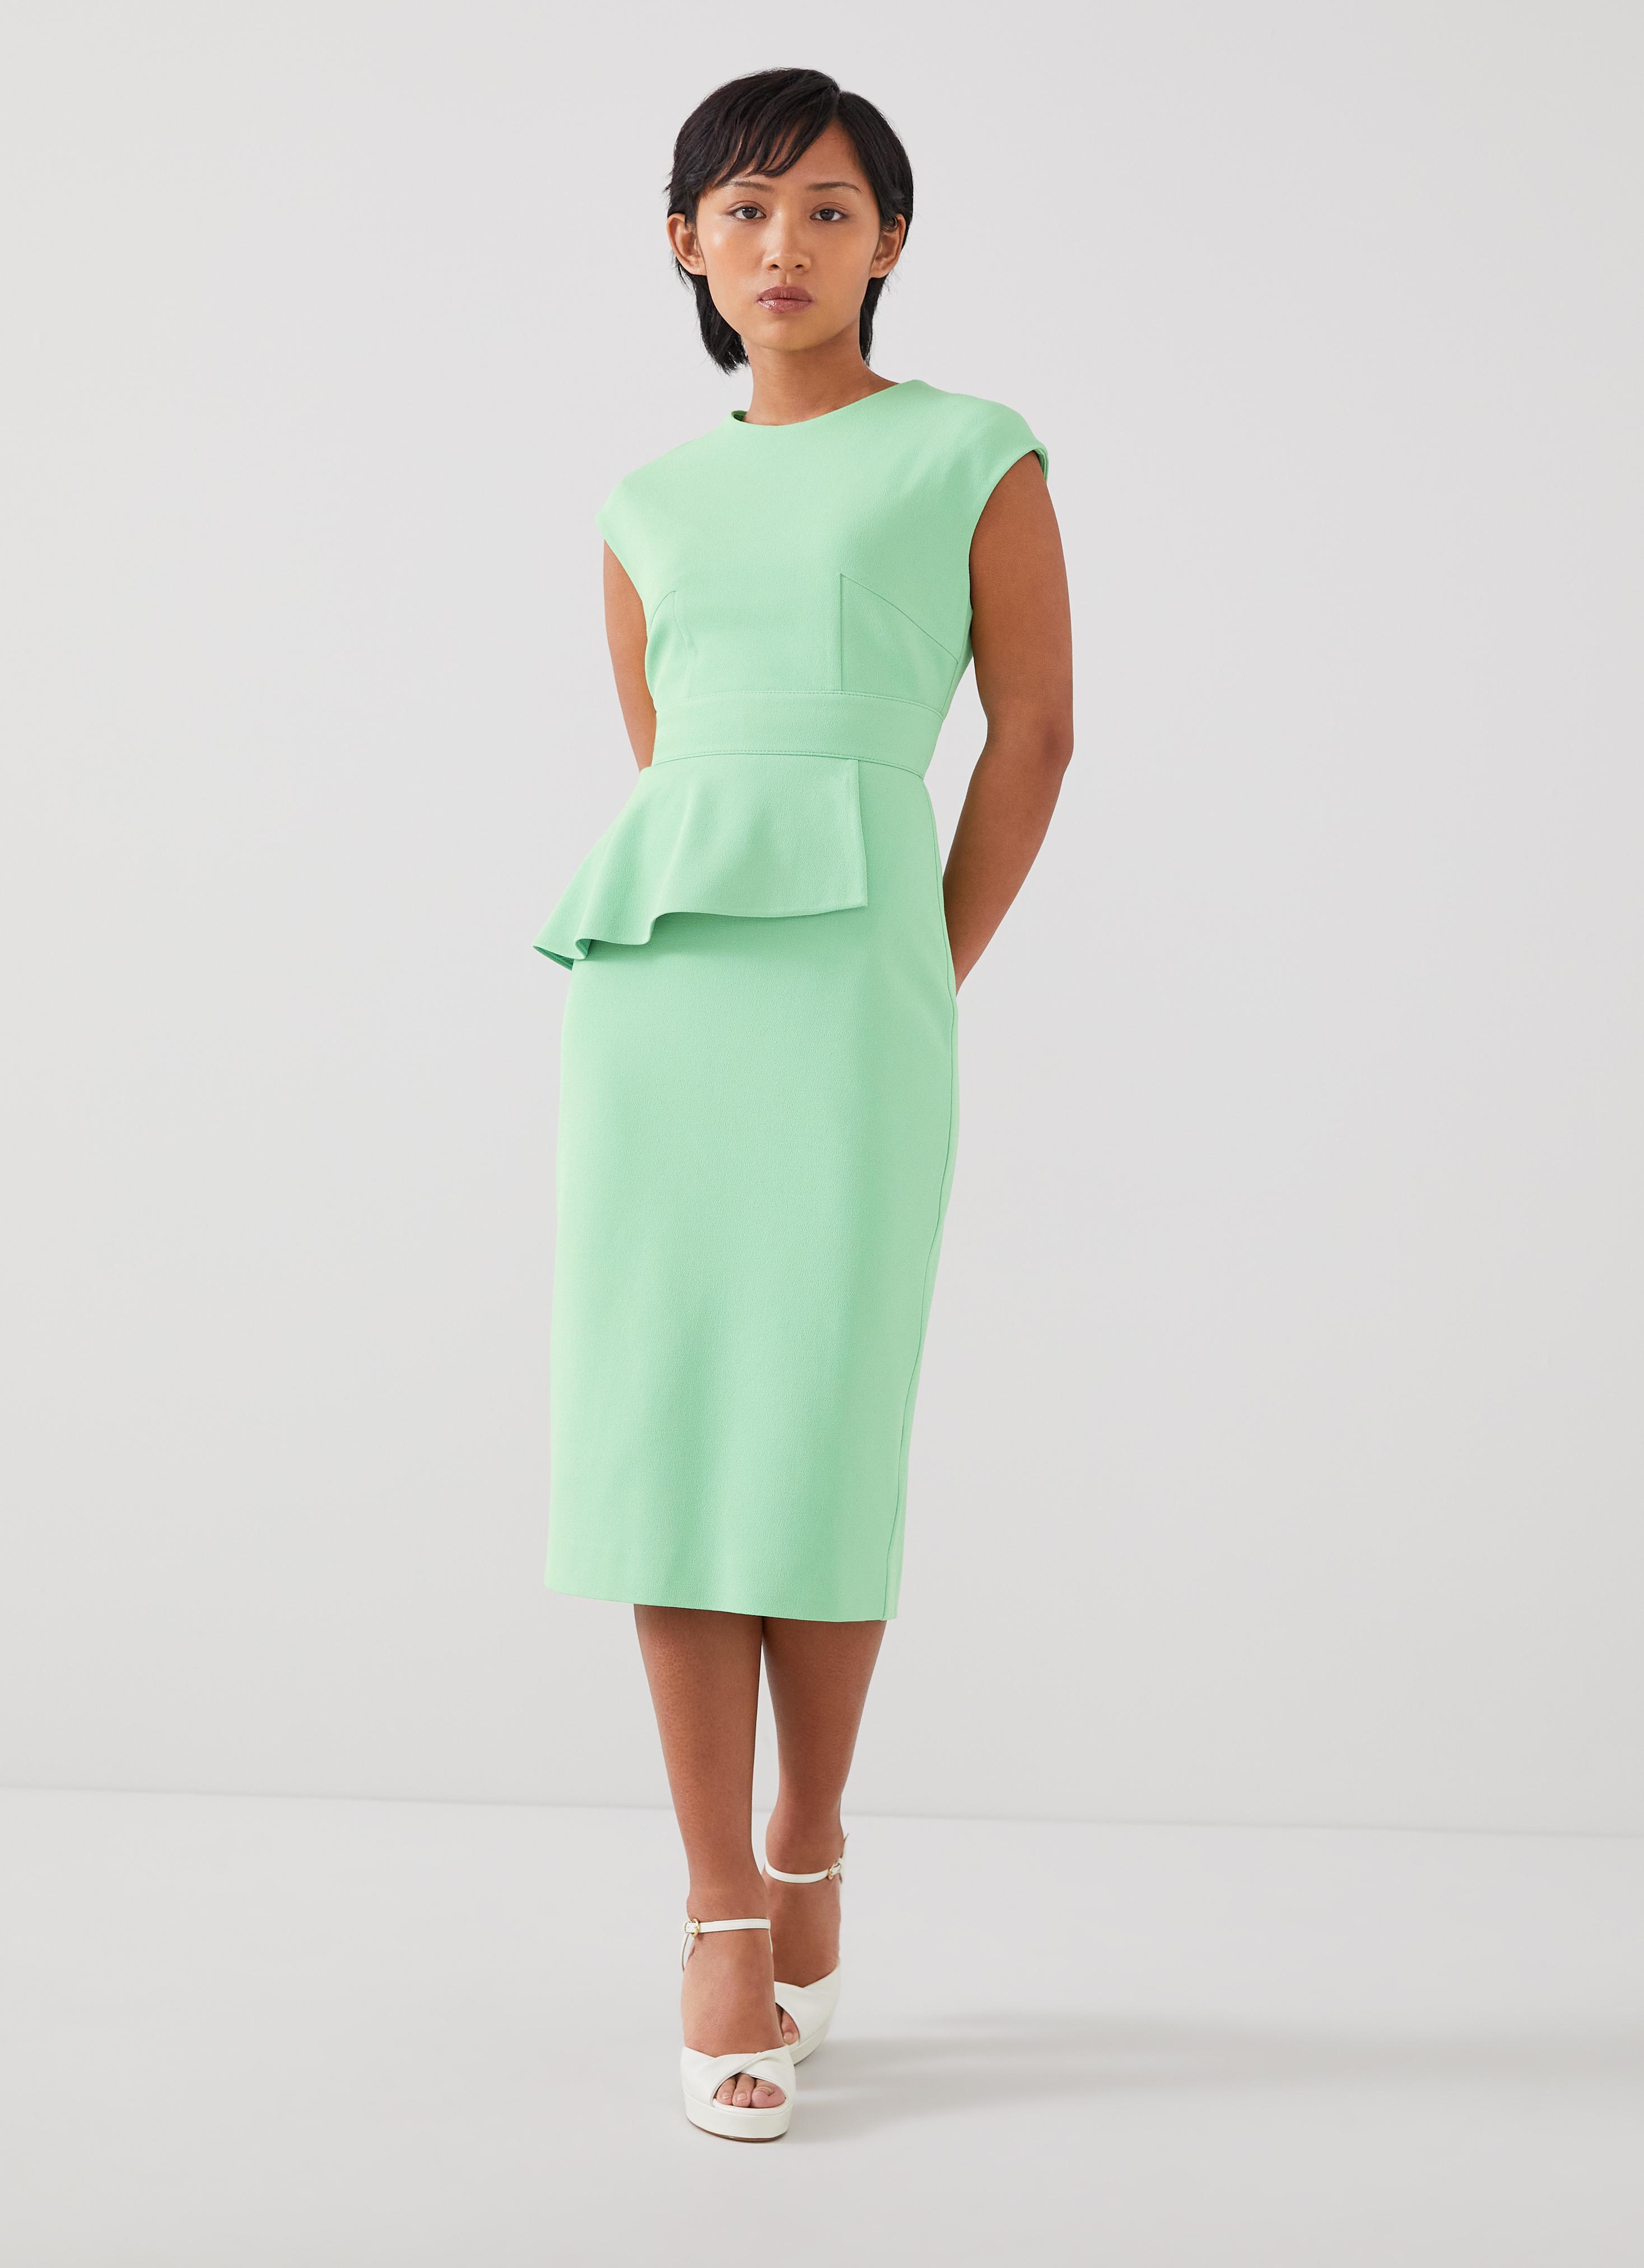 L.K.Bennett Mia Green Petite Dress with LENZING ECOVERO viscose, Green